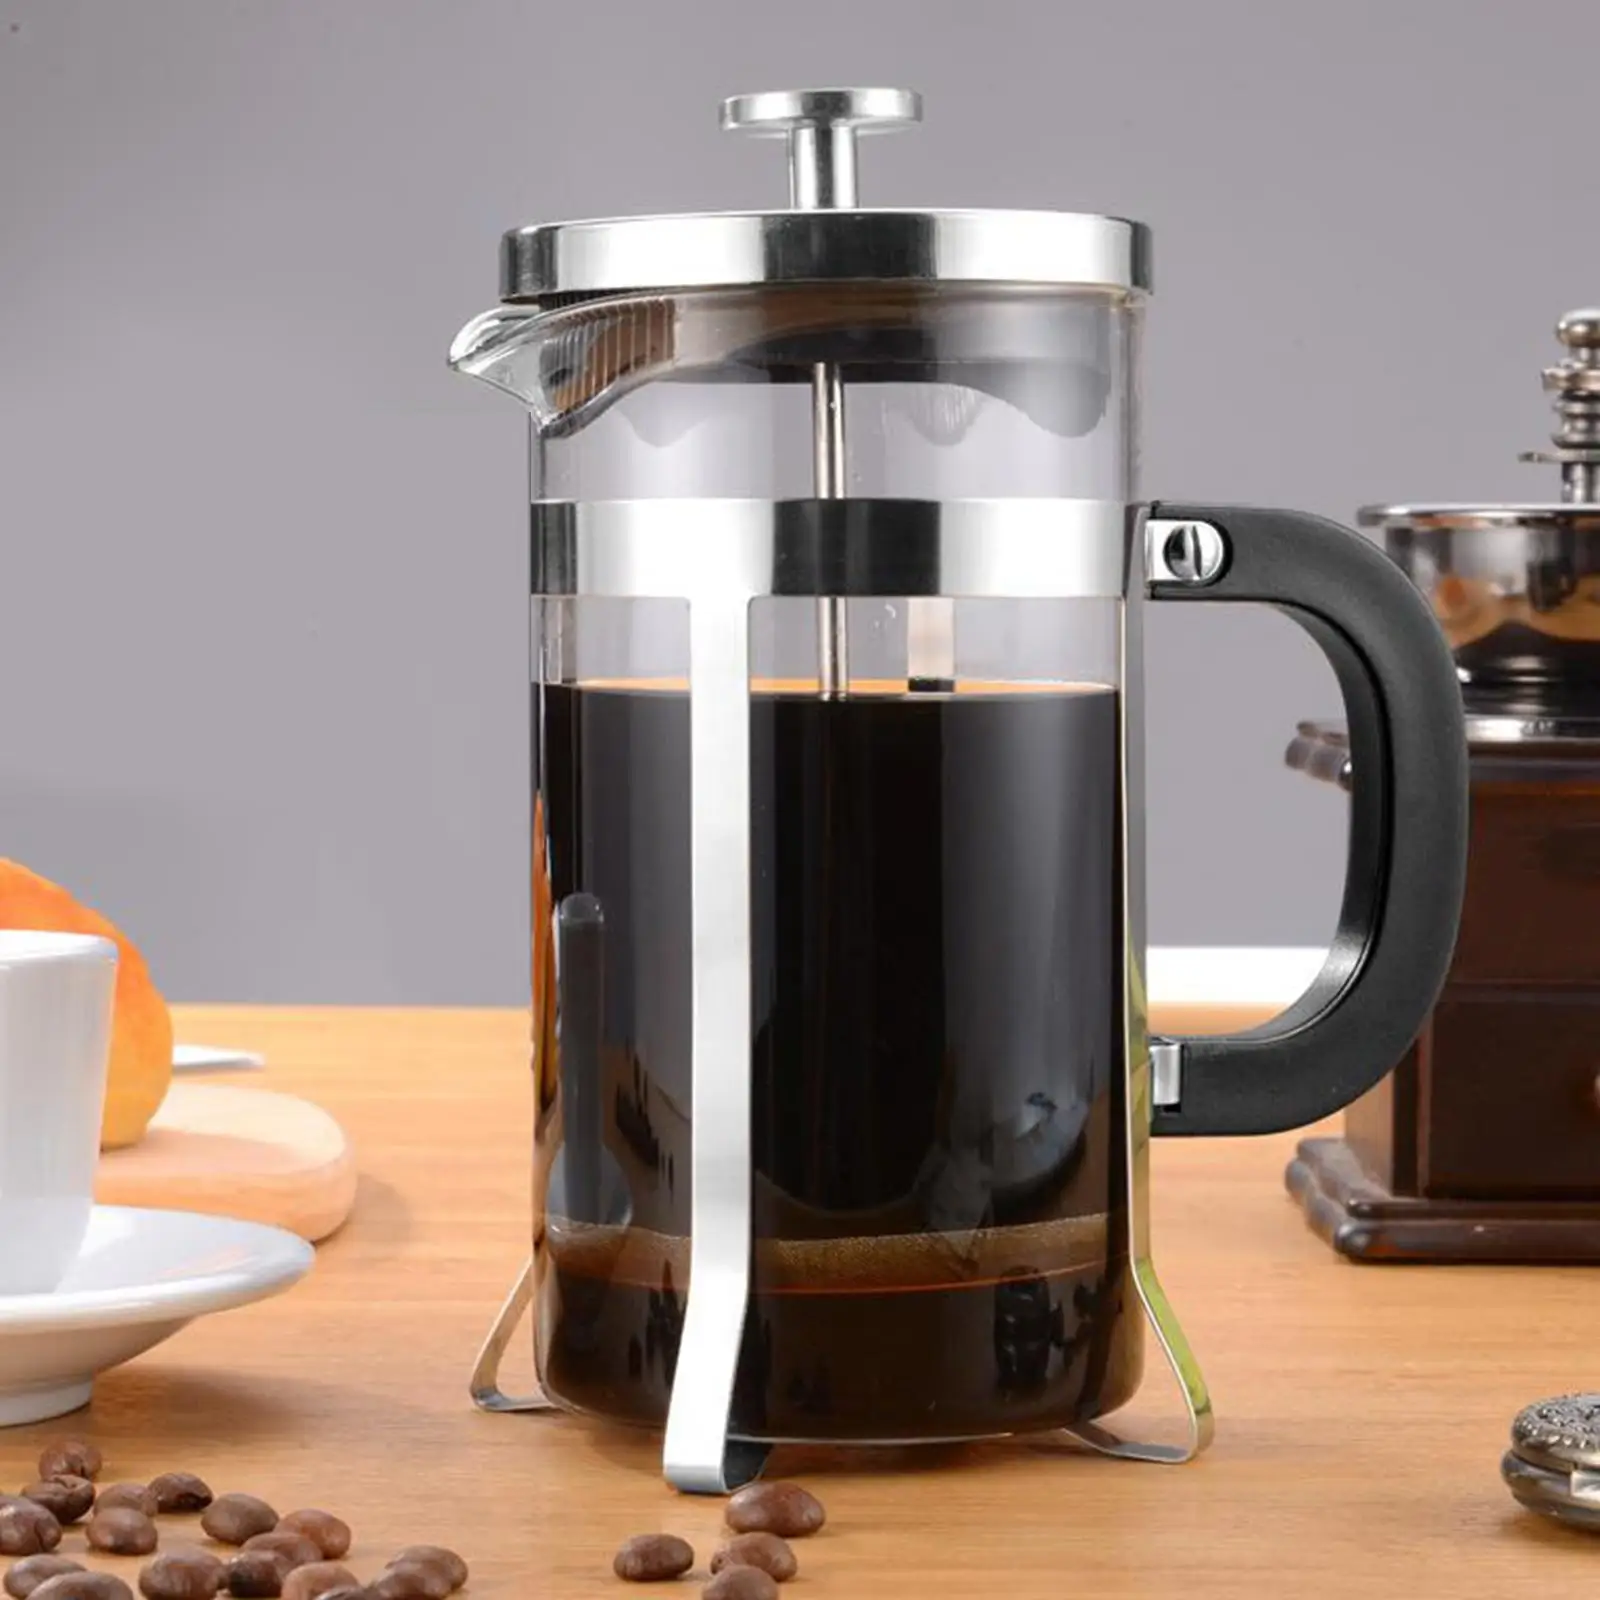 https://ae01.alicdn.com/kf/Sa8a2cf28cb504985a1845788ca02d1681/1pc-French-Press-Coffee-Maker-Insulated-Filter-Pot-BPA-Free-Coffee-Drinkware.jpg